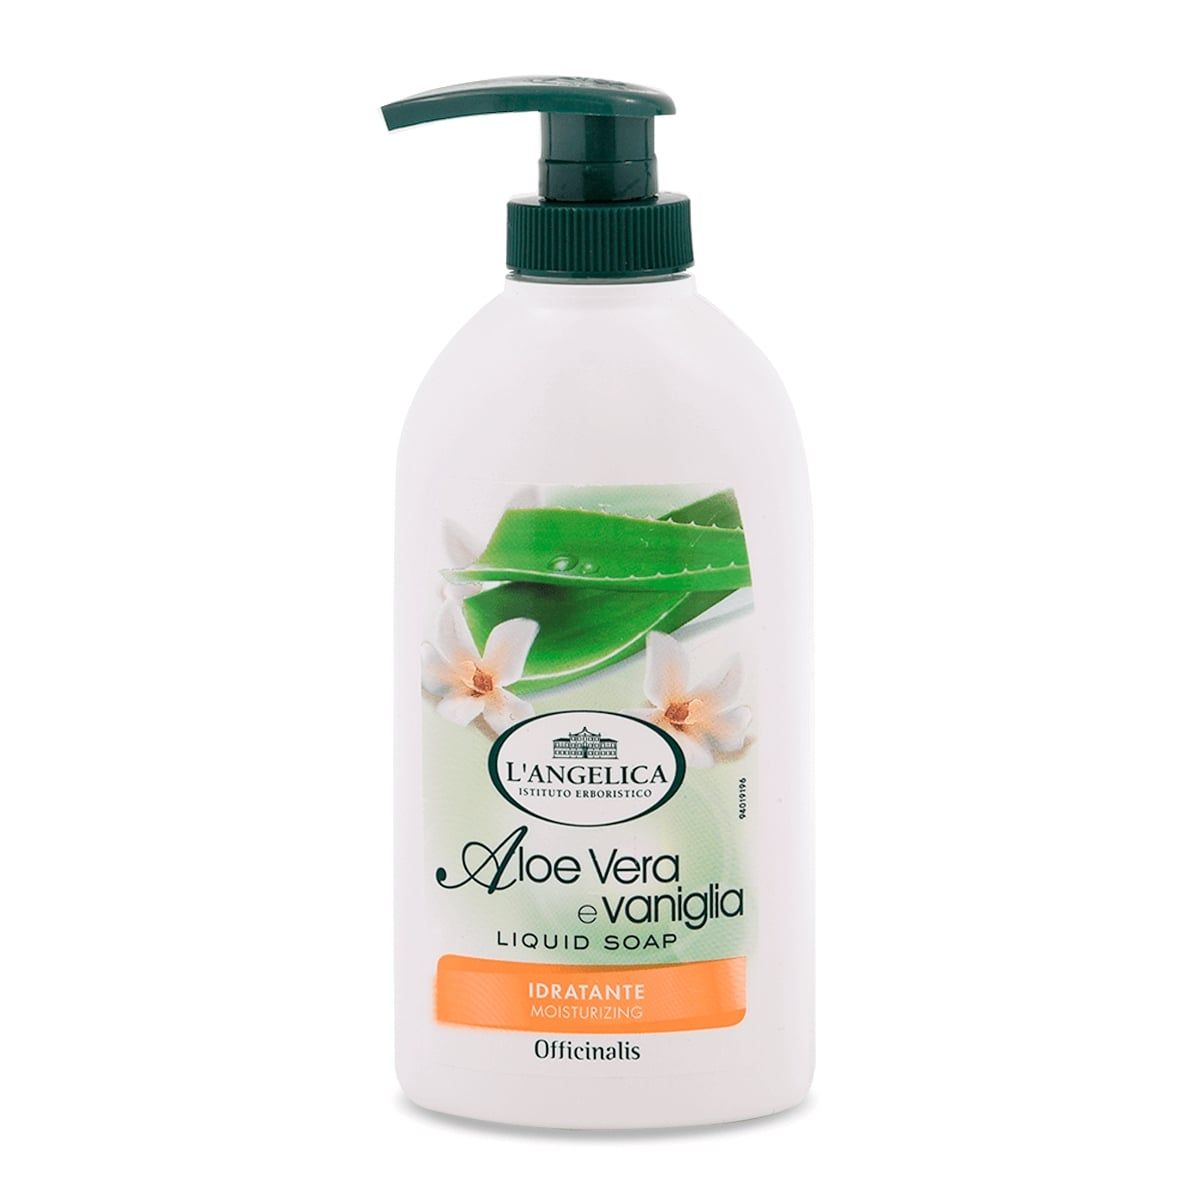 Aloe Vera and Vanilla Liquid Soap